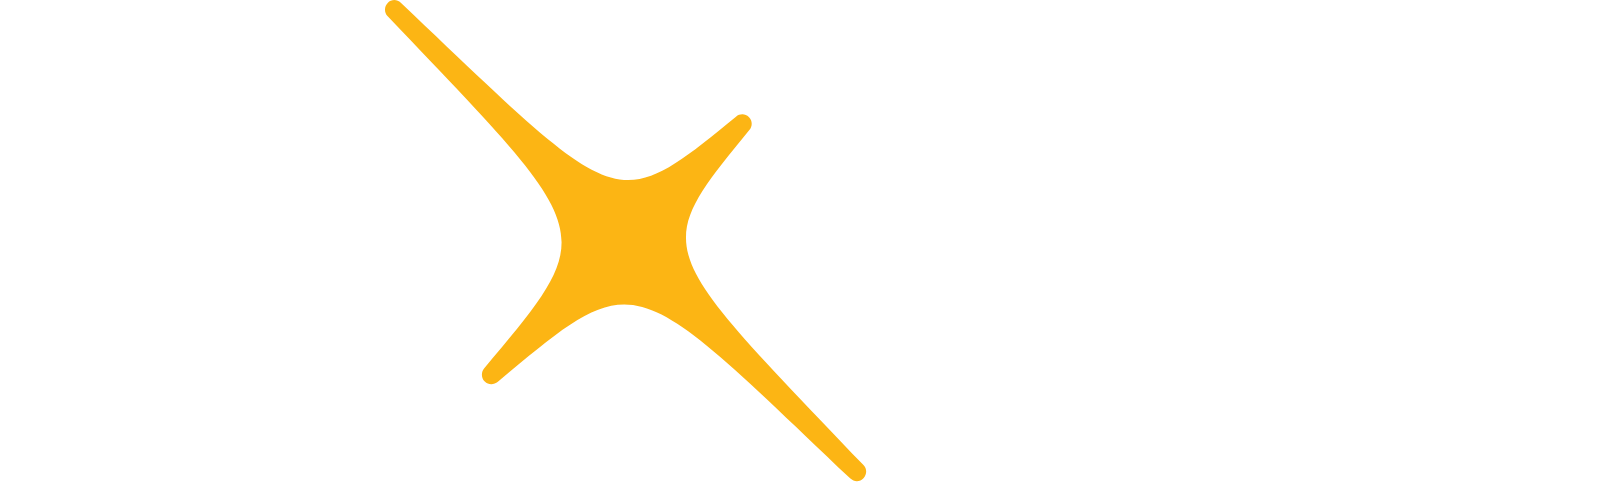 Nexters Logo groß für dunkle Hintergründe (transparentes PNG)